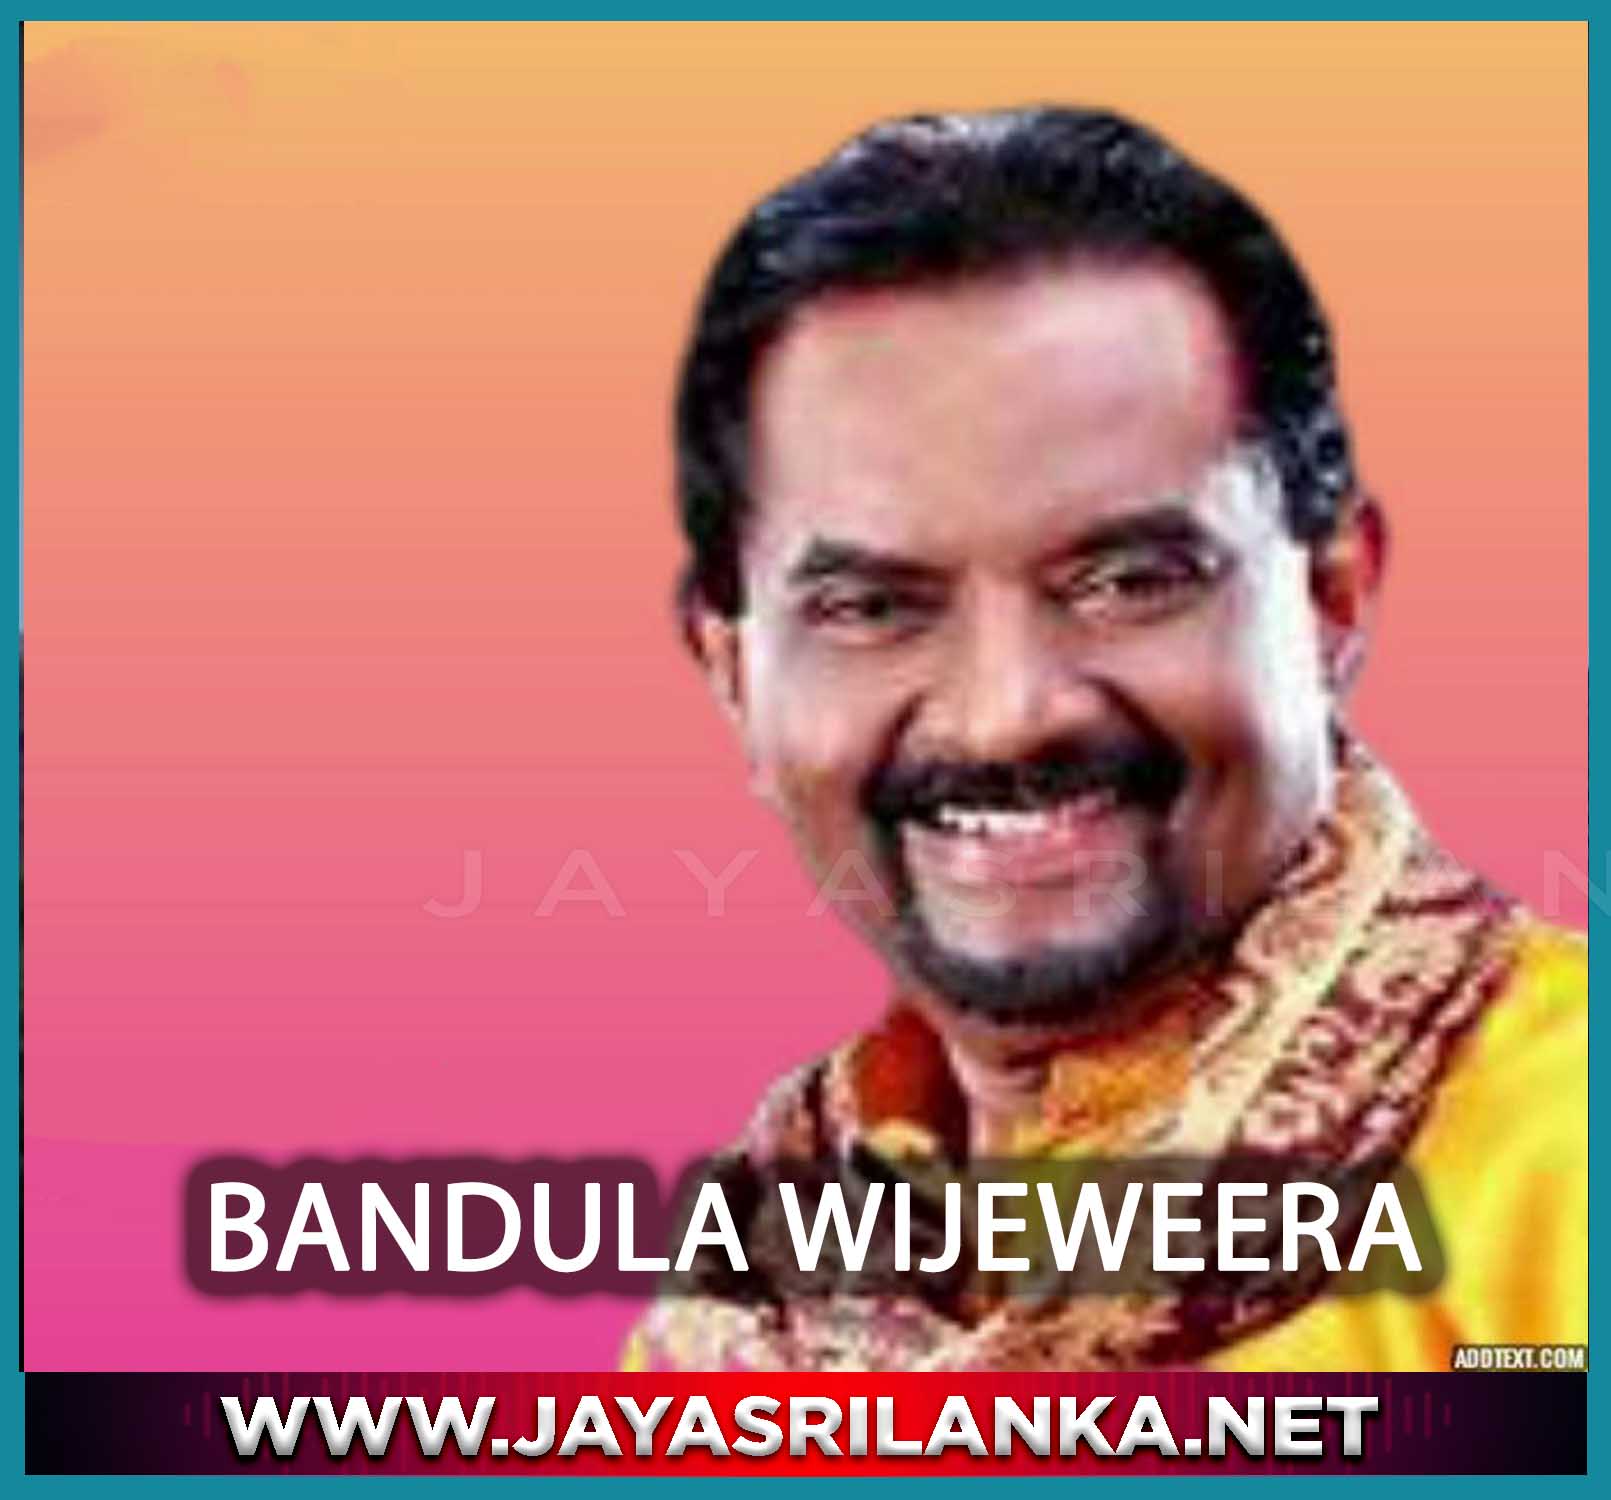 Asaranakama Thunkudu Wee - Bandula Wijeweera mp3 Image